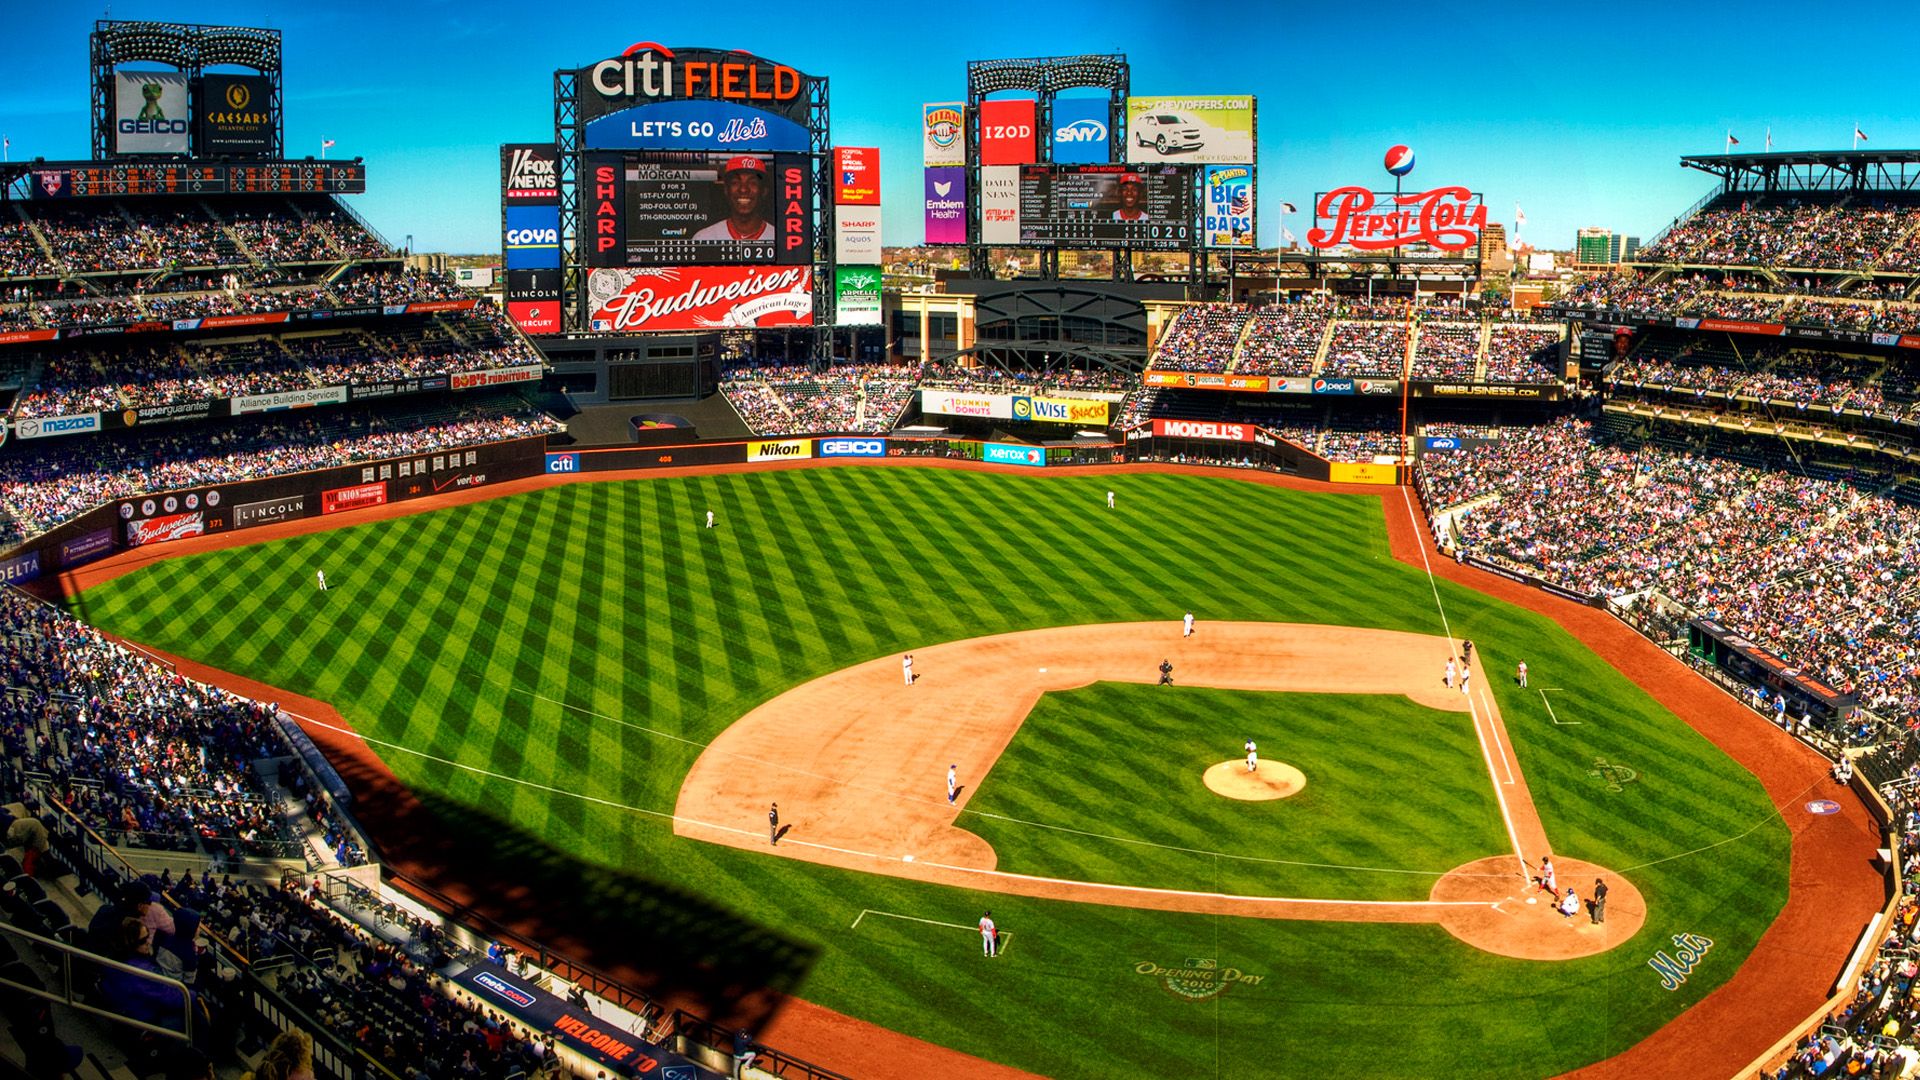 Download New York Mets iPhone Baseball Wallpaper